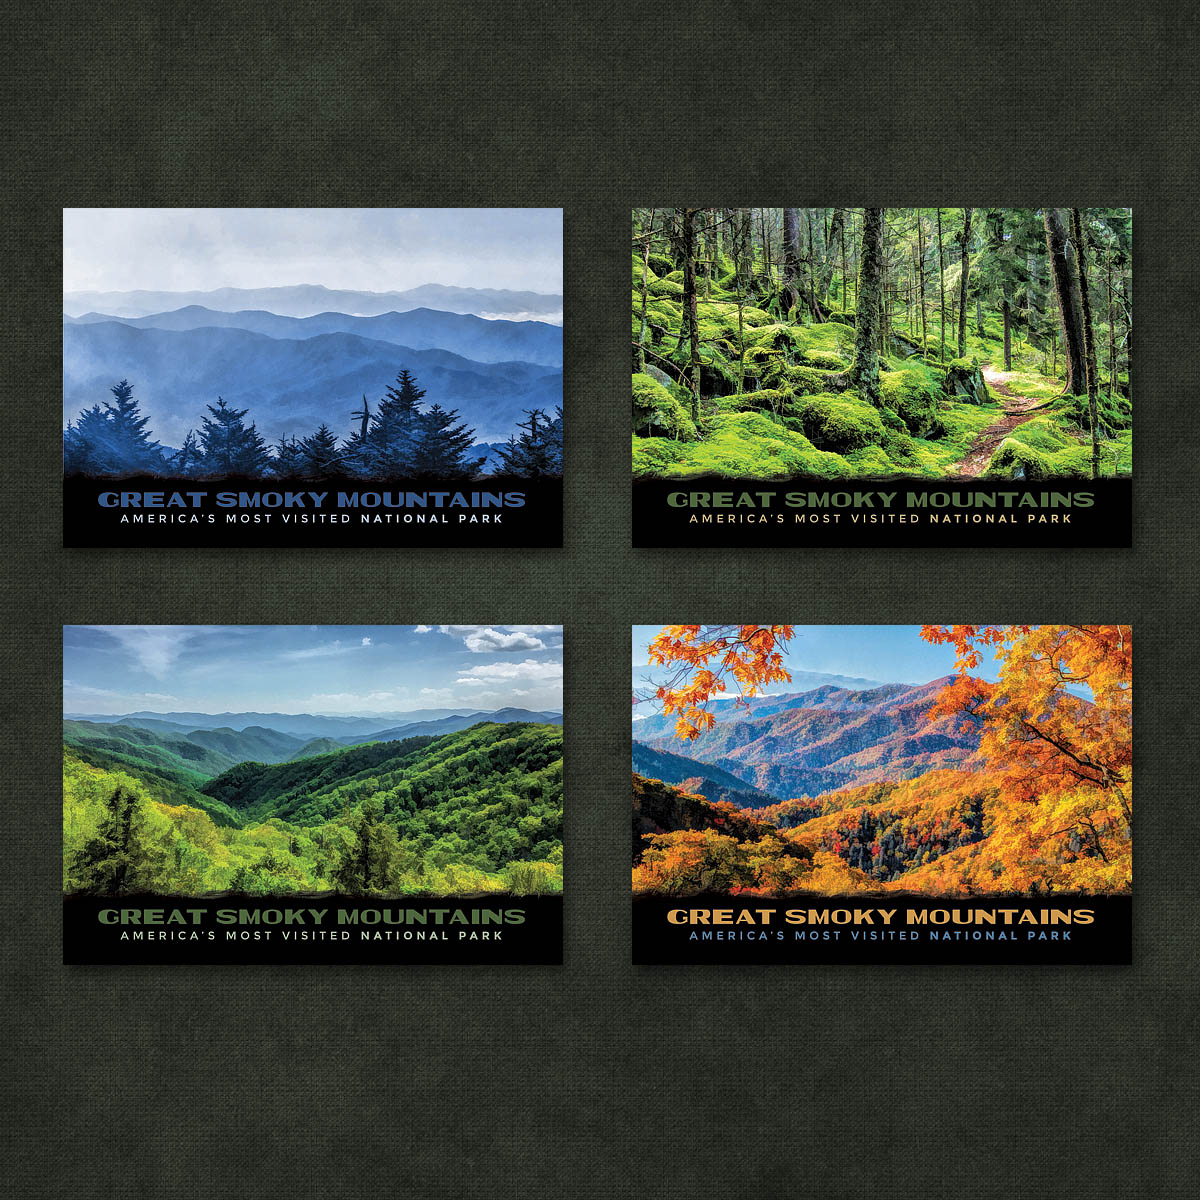 Smoky Mountains Postcards | Set of 7